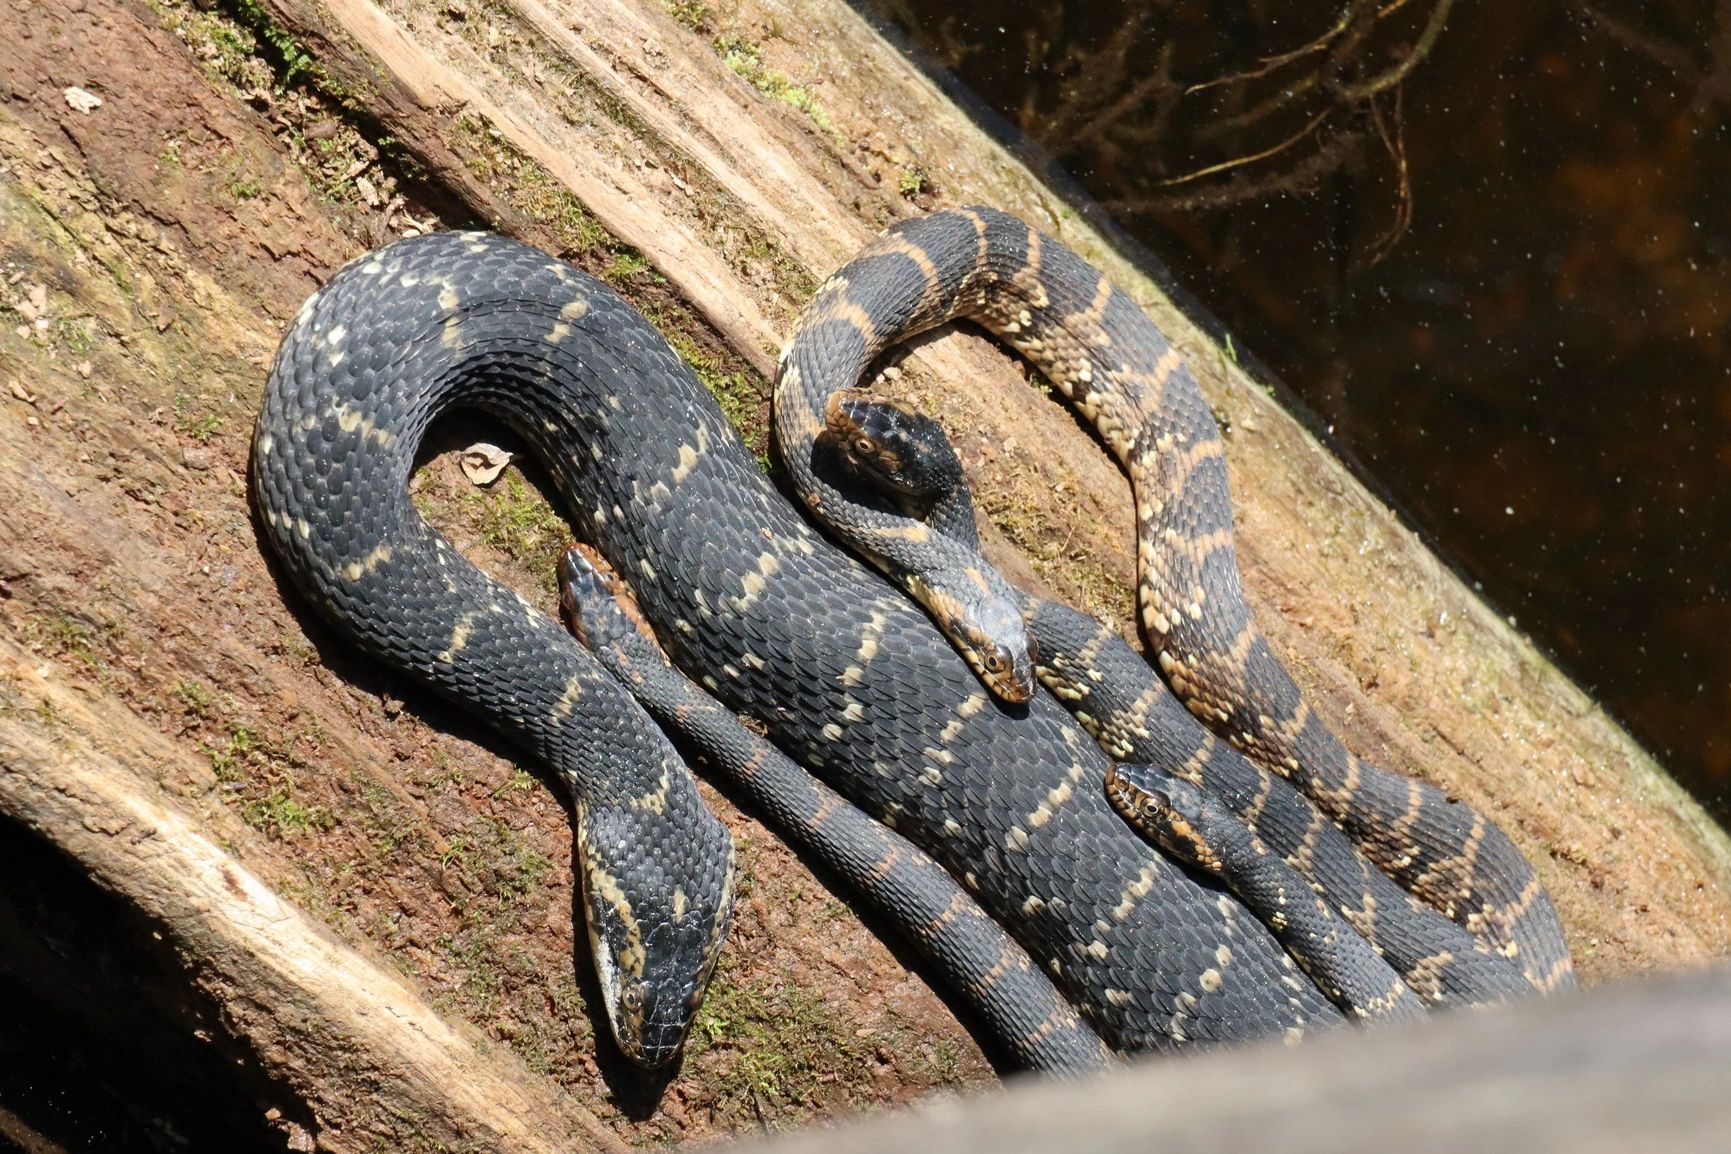 Southwest Florida Wildlife Photos - Five Florida Banded Water Snakes Sunning, Big Cypress Preserve